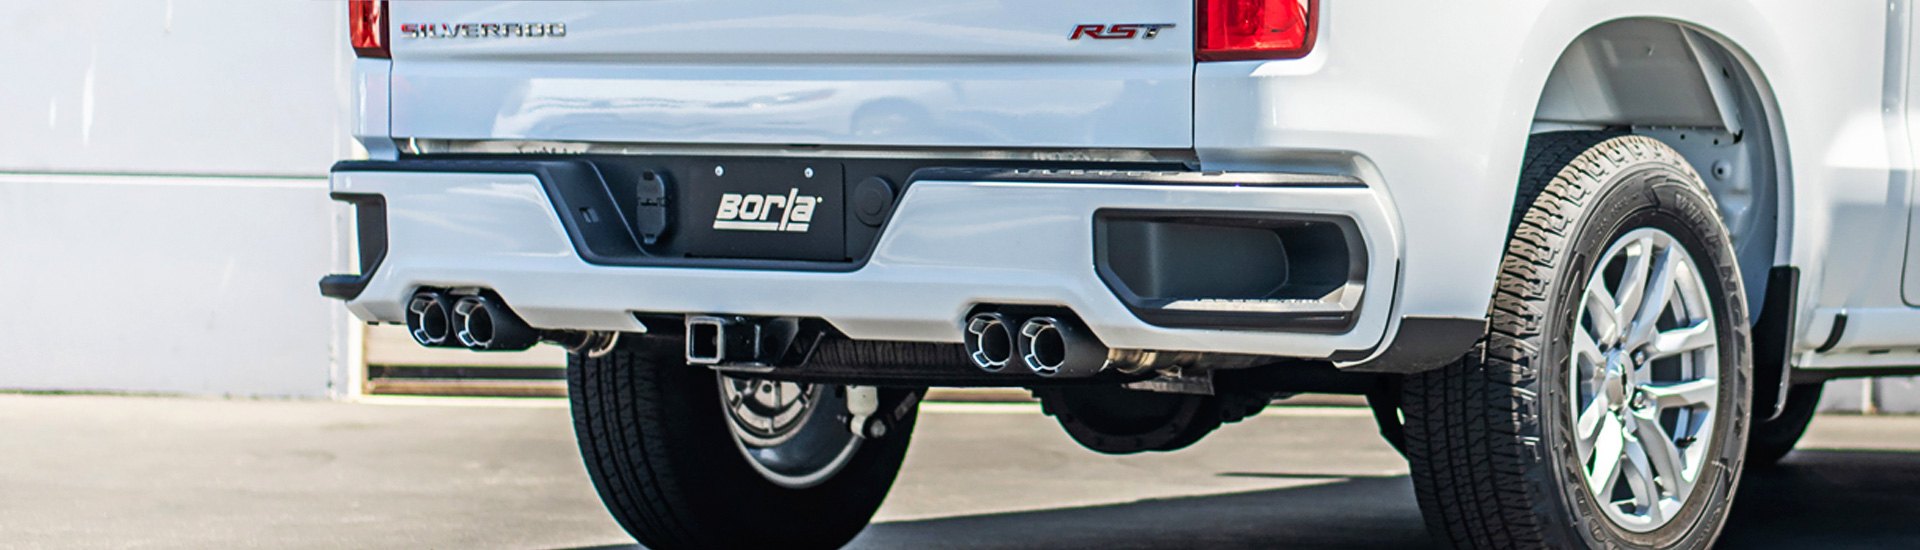 Custom-Fit New Borla Exhaust Systems For 2019 Chevy Silverado